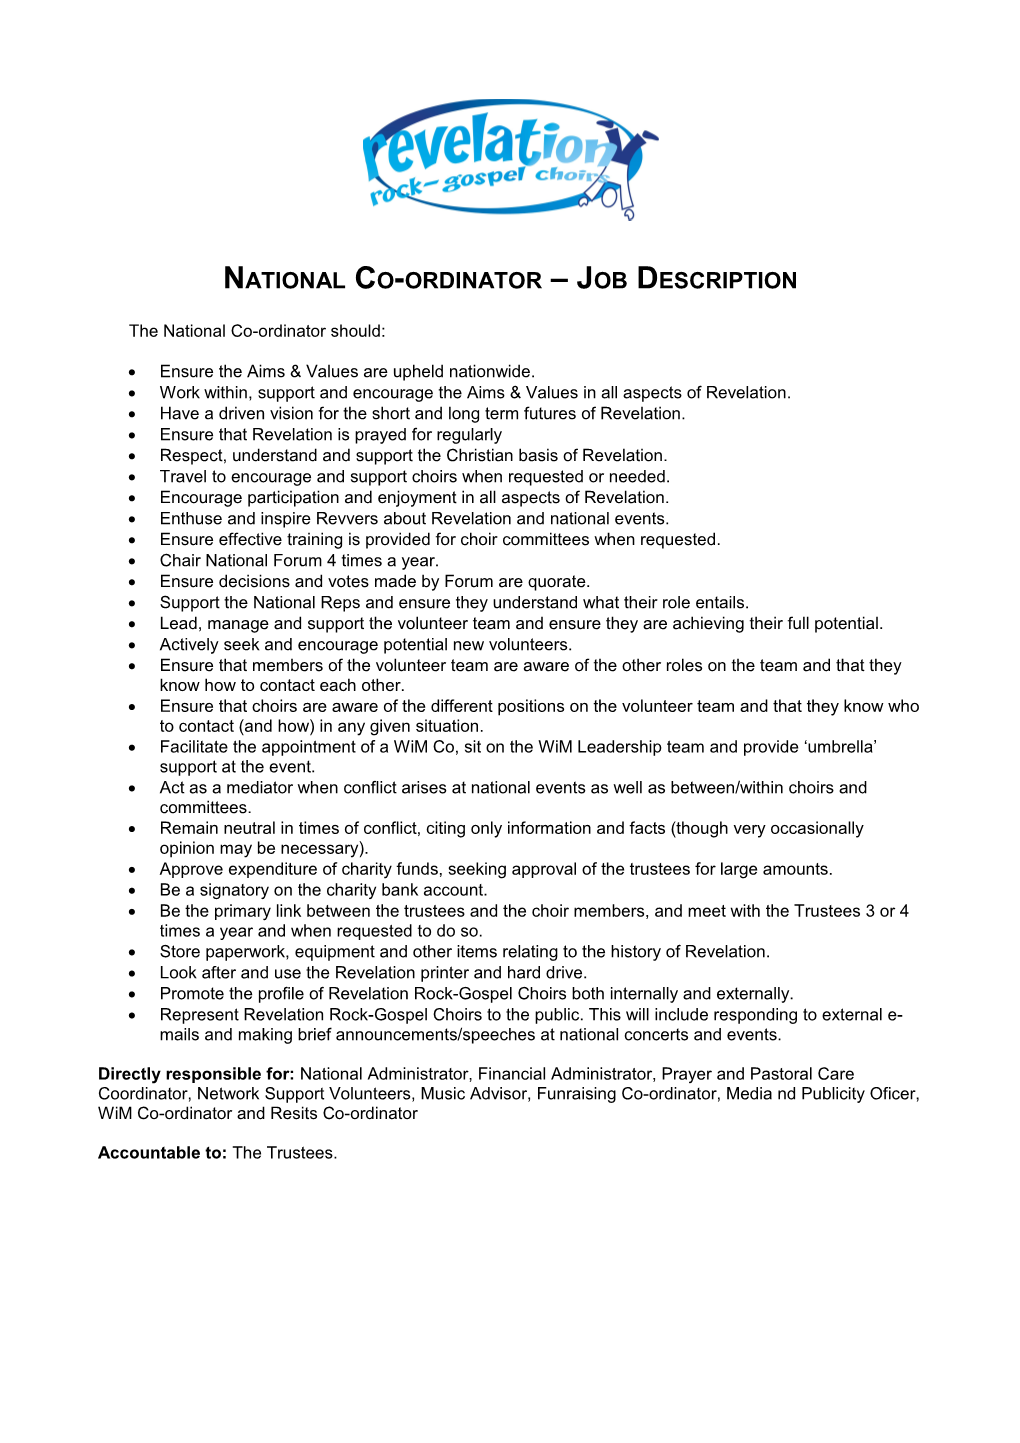 National Co-Ordinator Job Description